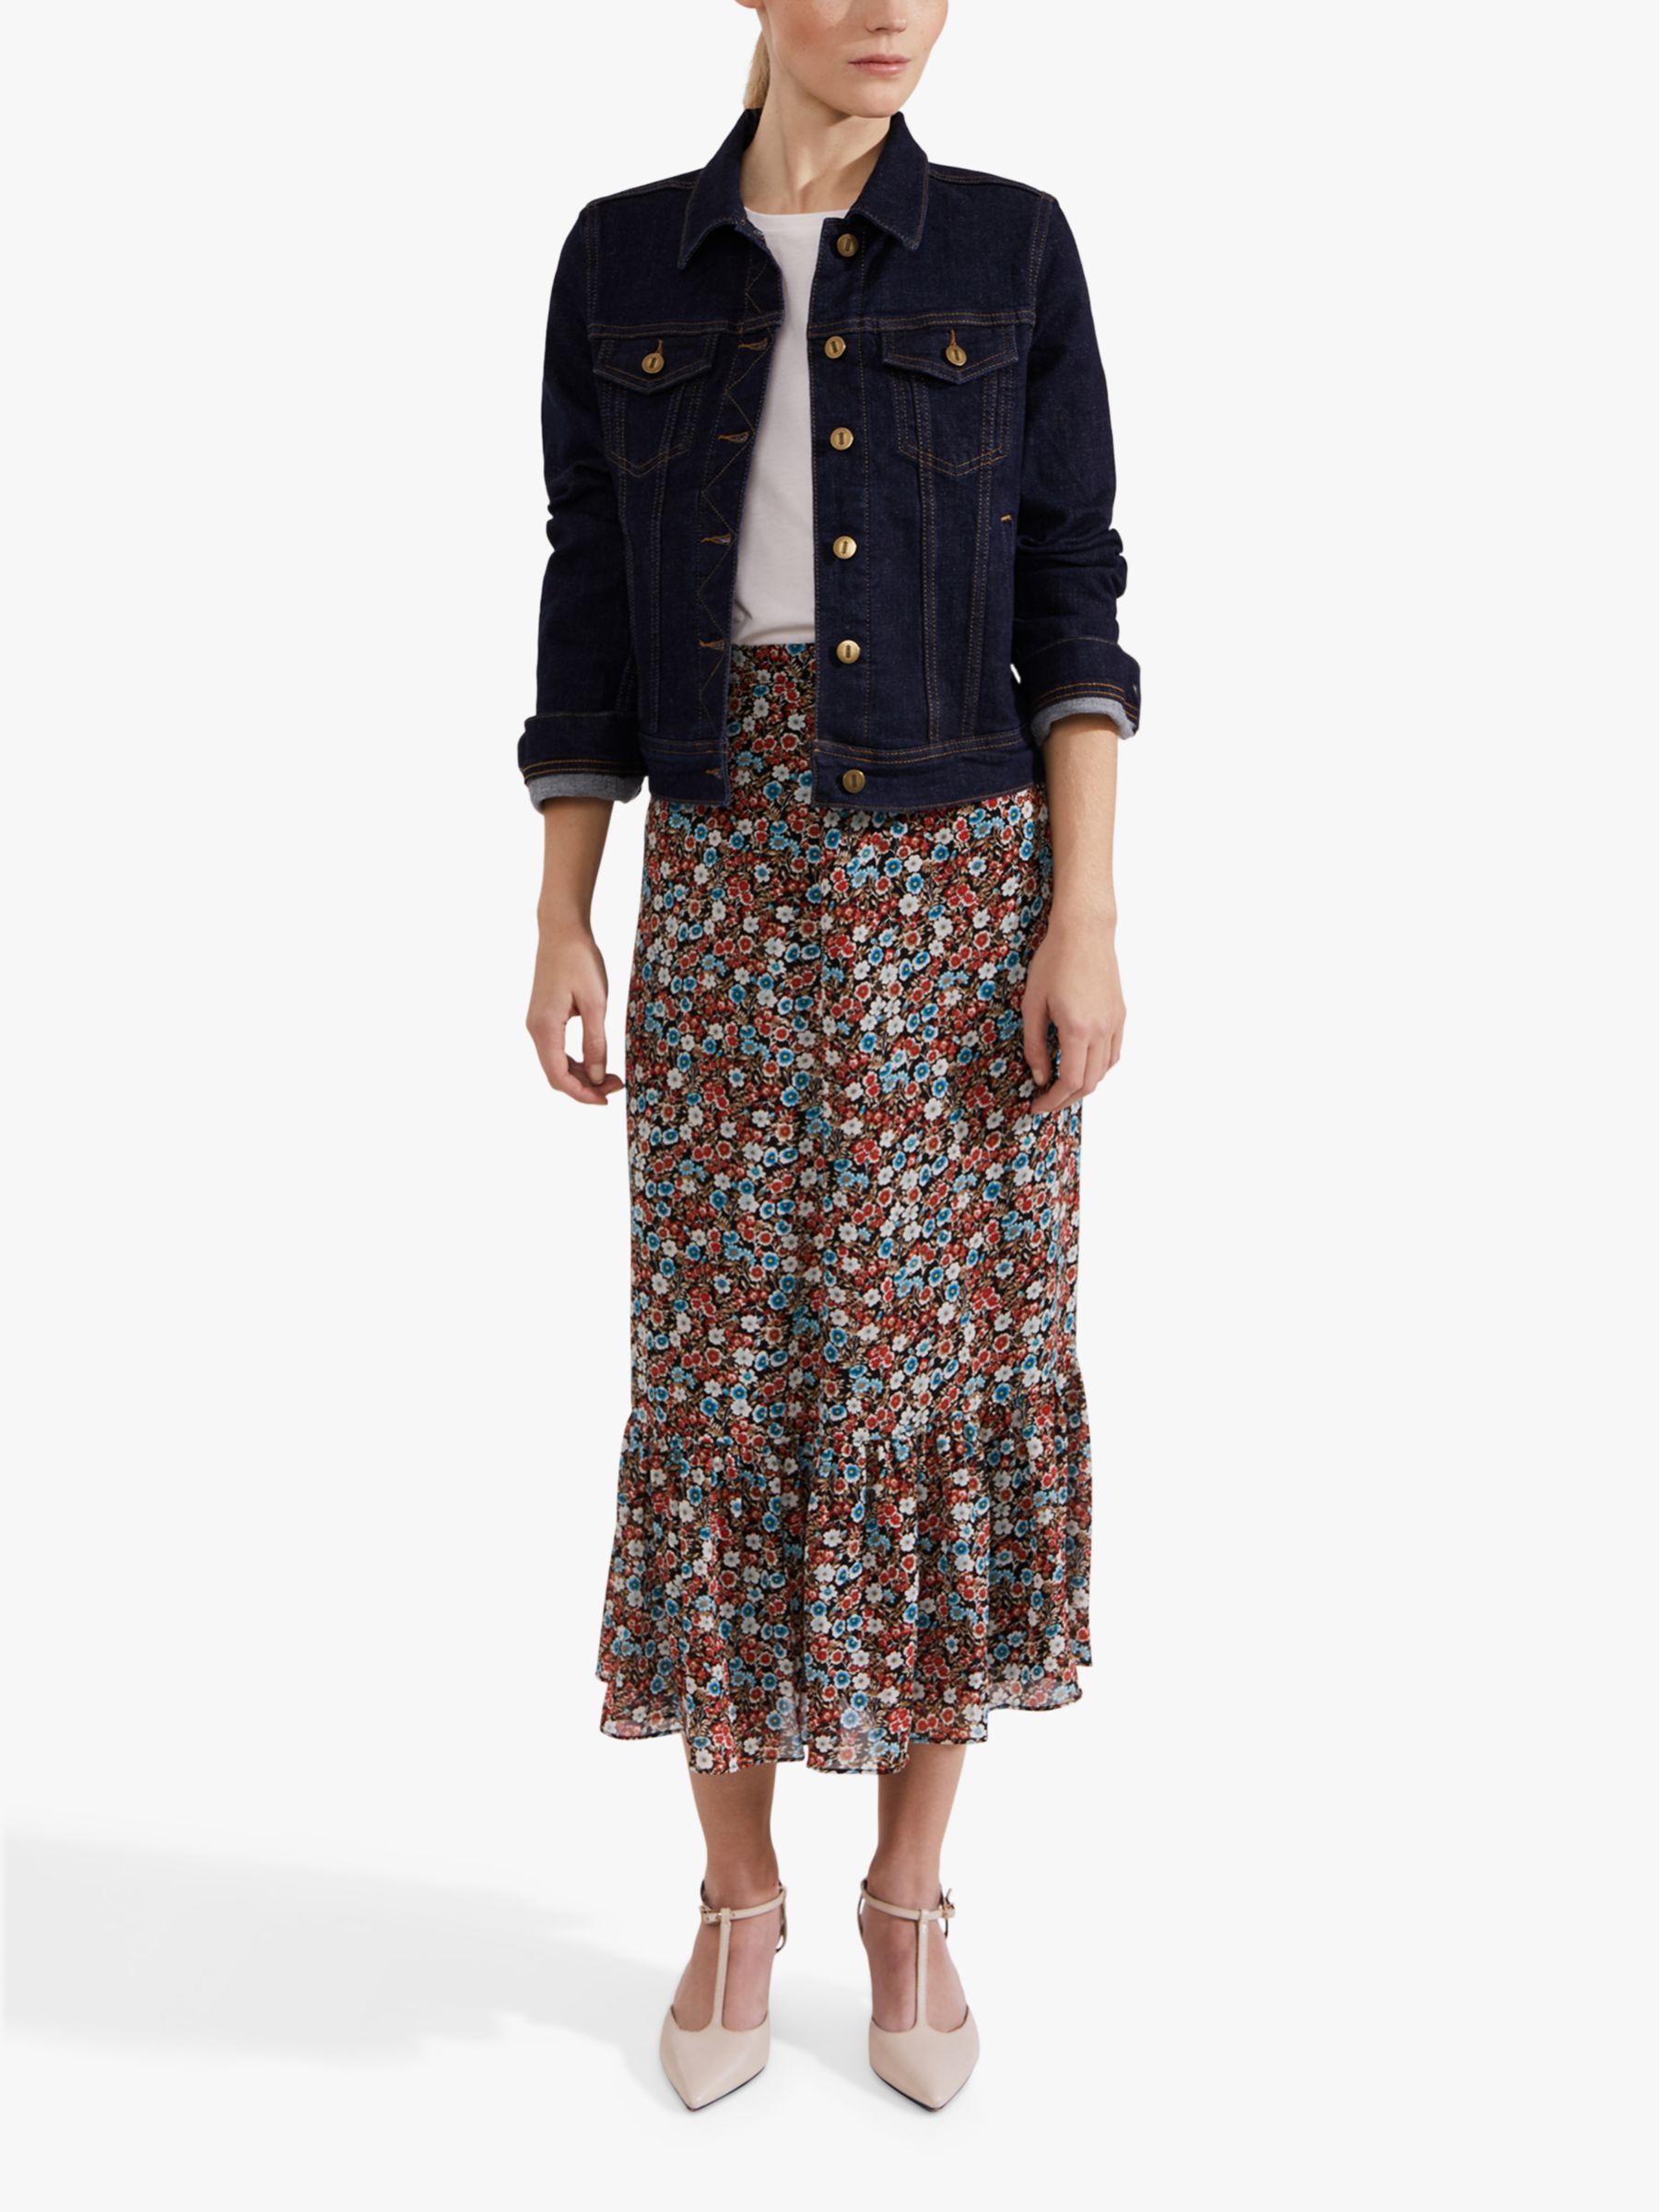 Hobbs Naeva Floral Print Midi Skirt, Multi at John Lewis & Partners